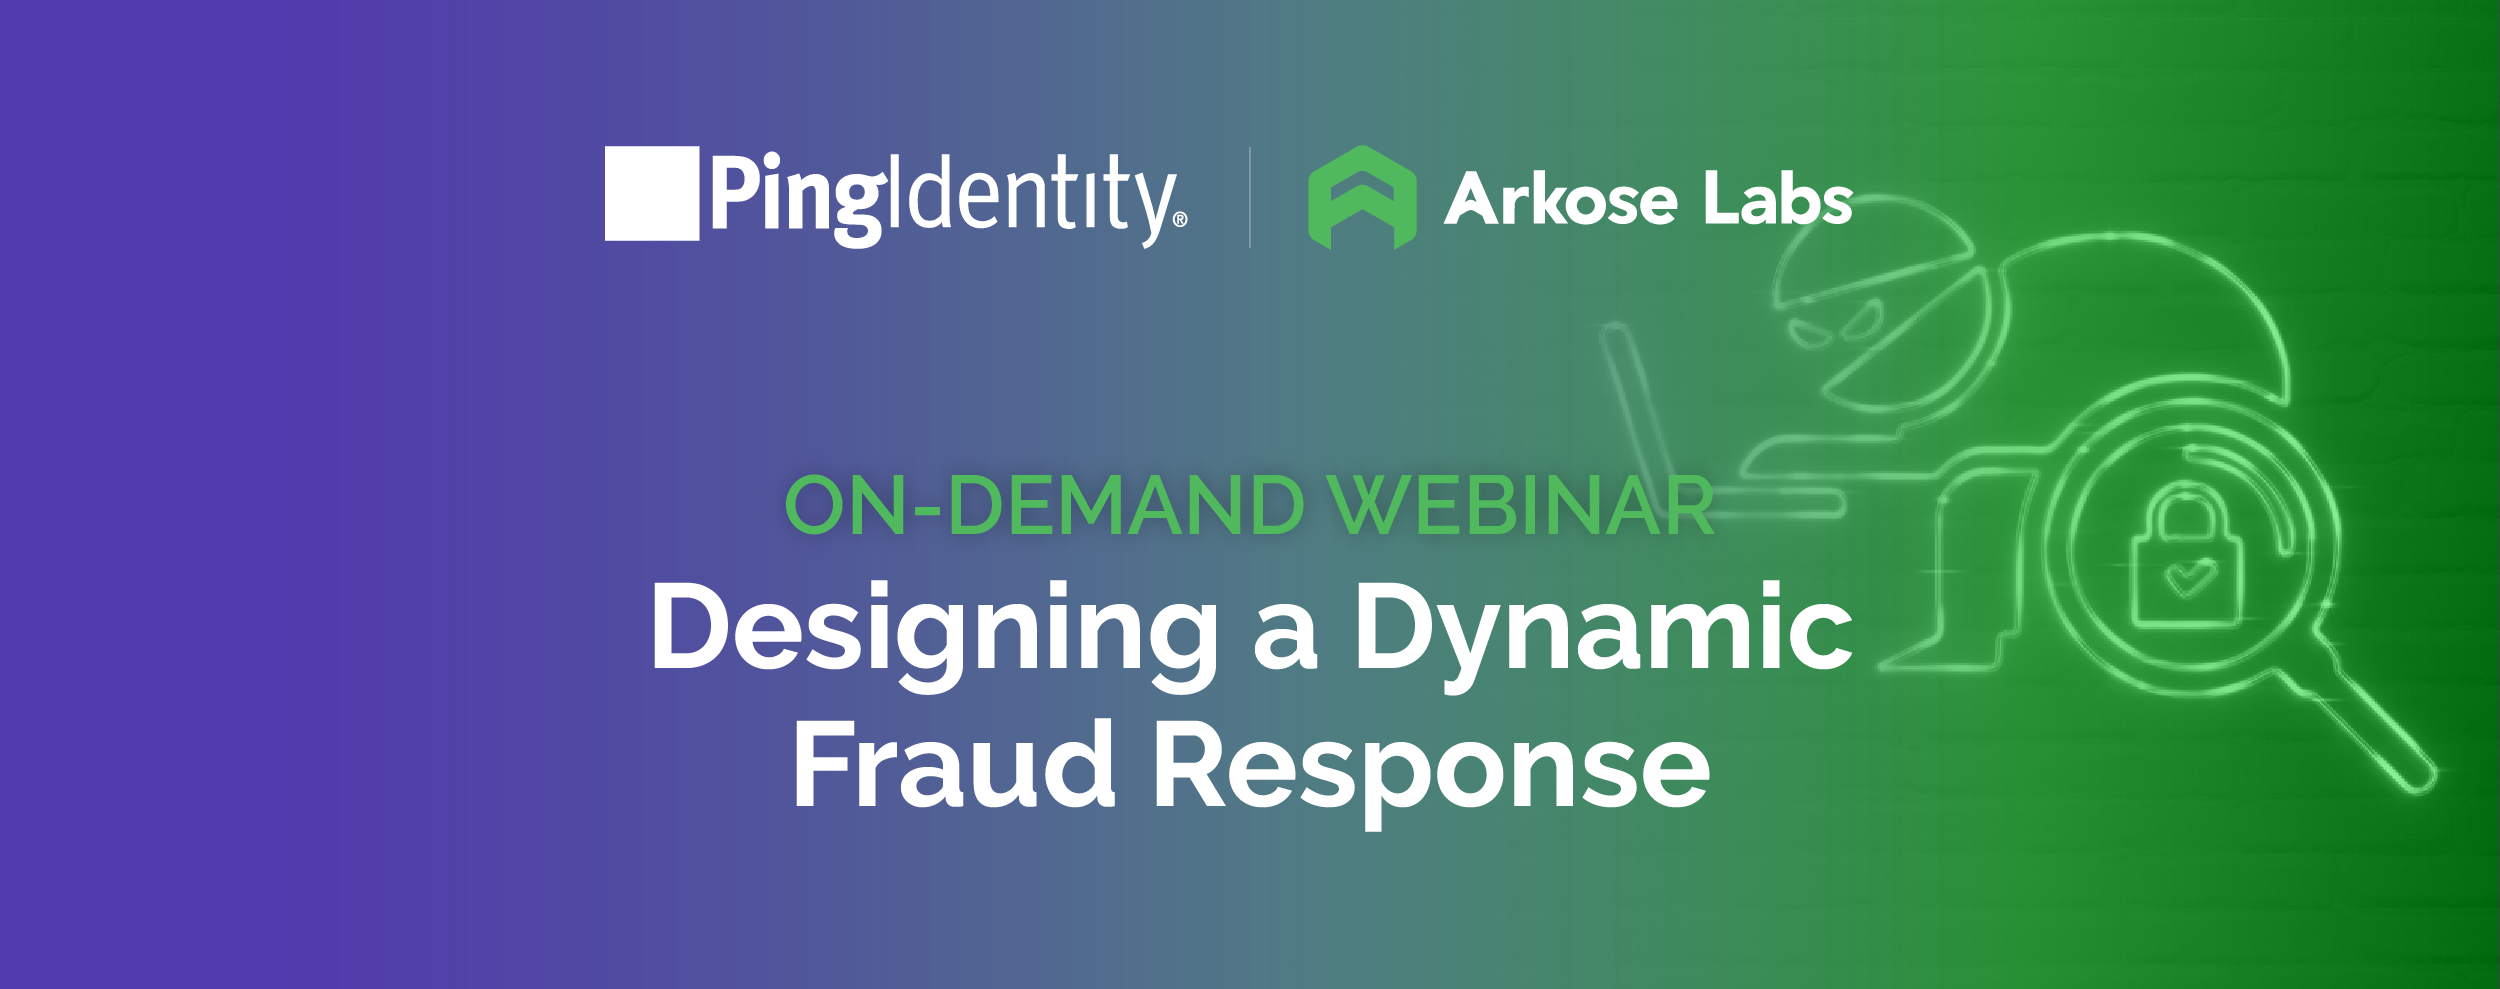 Designing a Dynamic Fraud Response